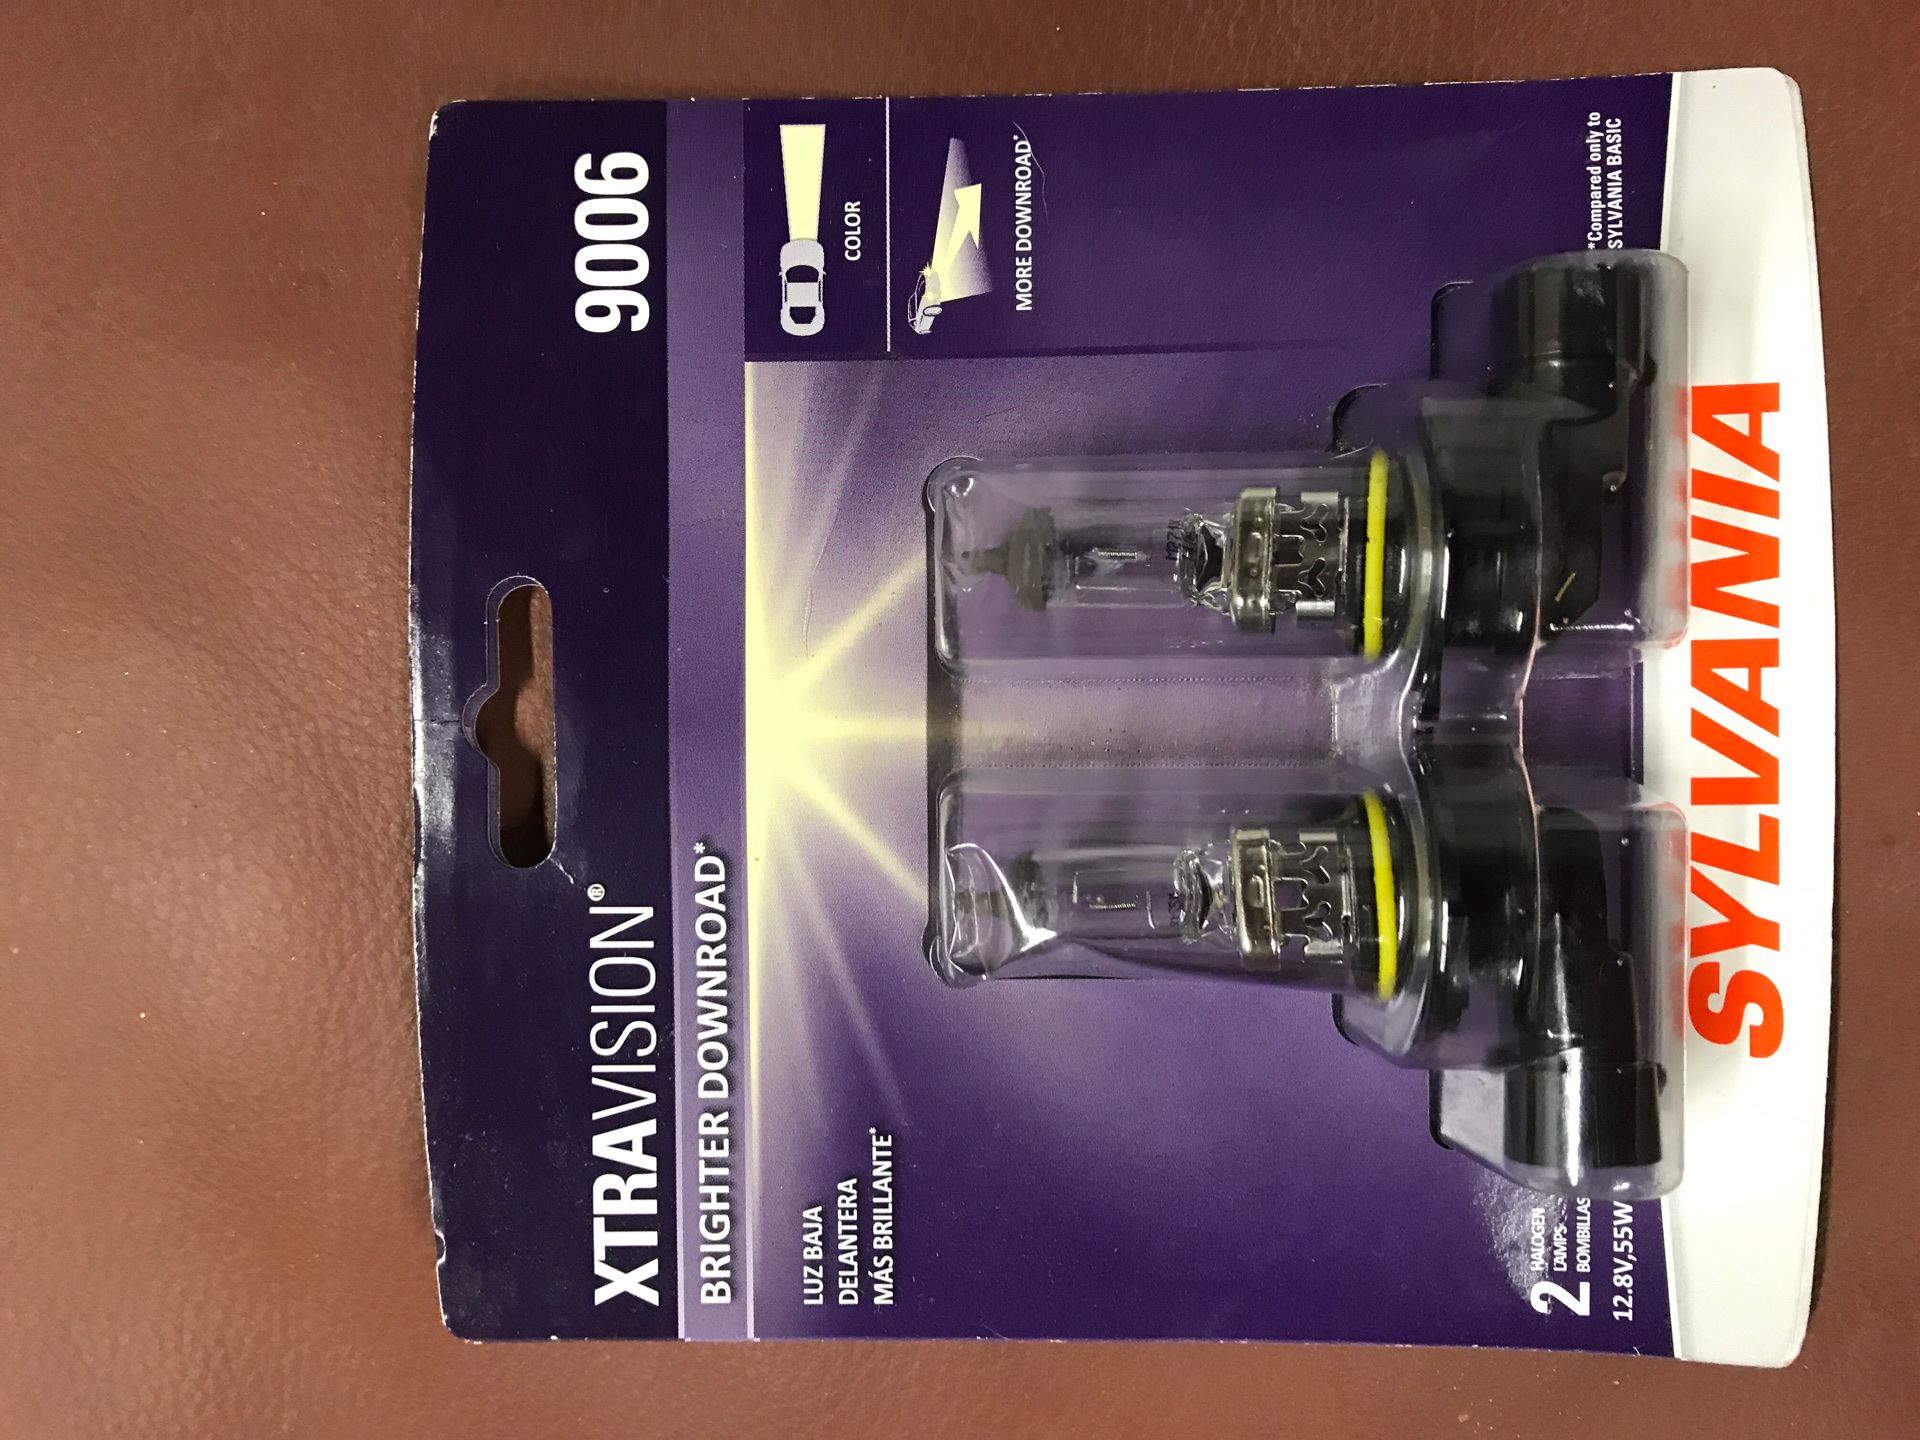 Sylvania 9006 halogen headlights